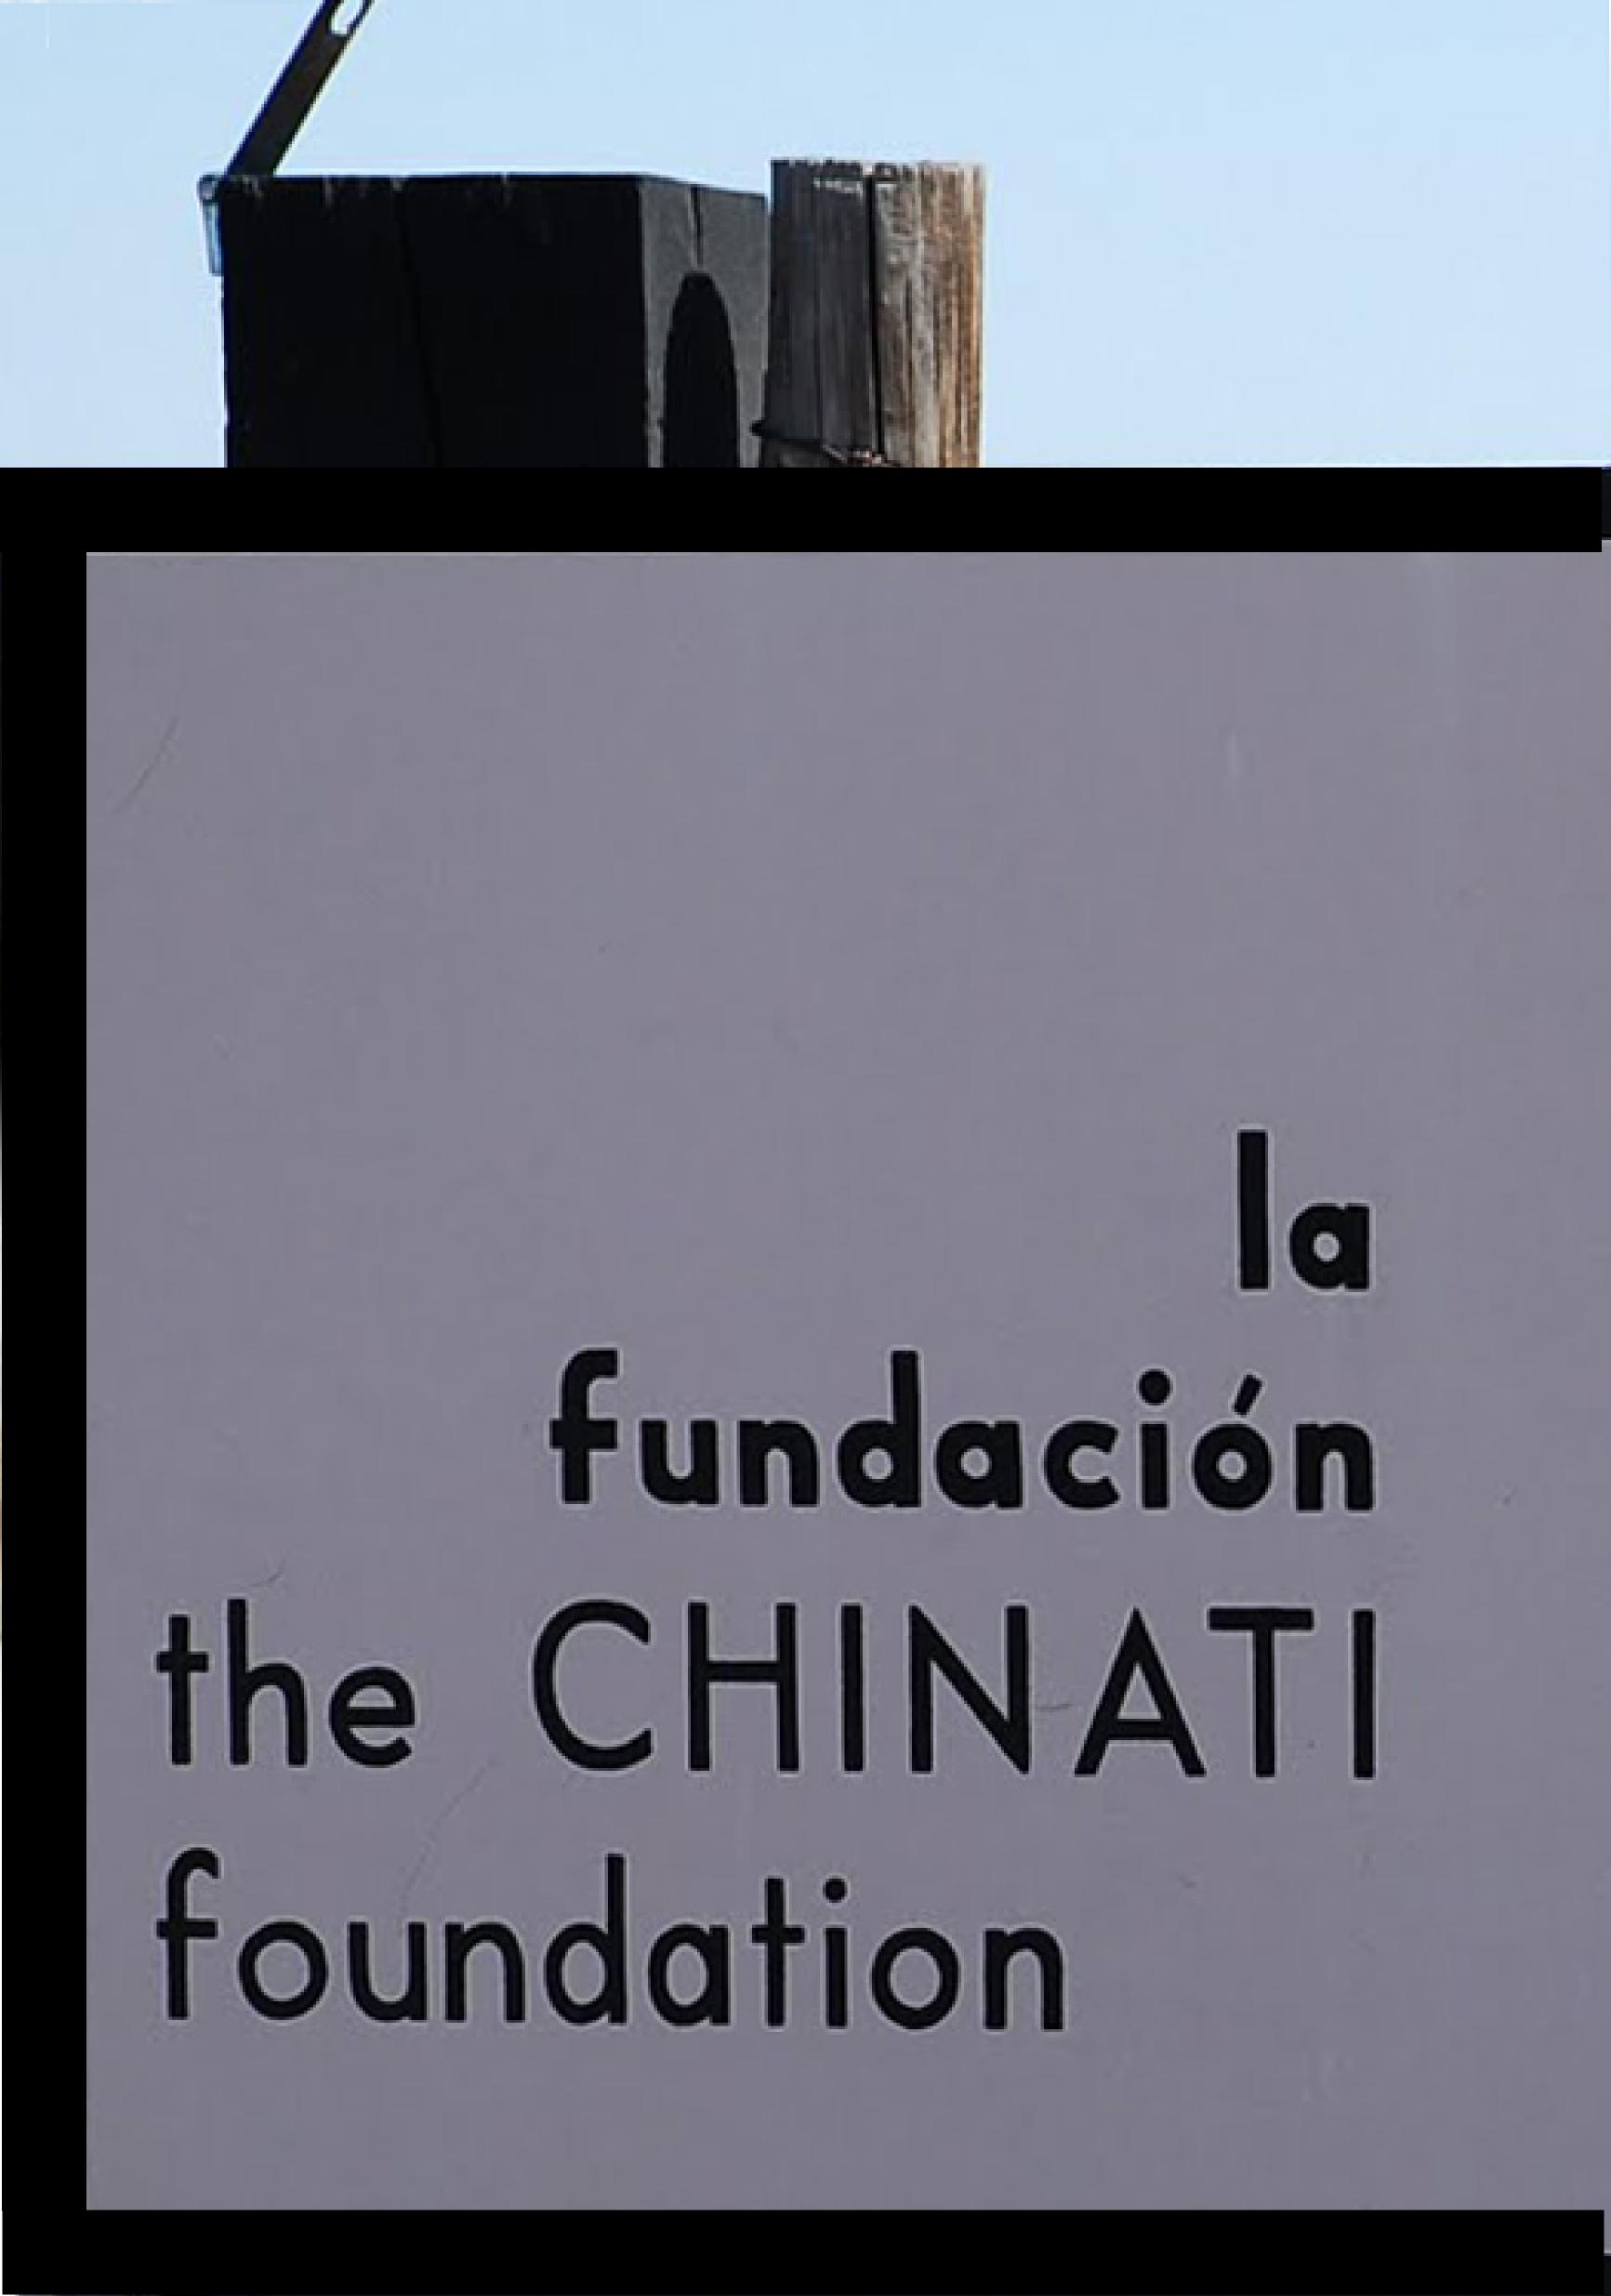 THE CHINATI FOUNDATION, MARFA TX